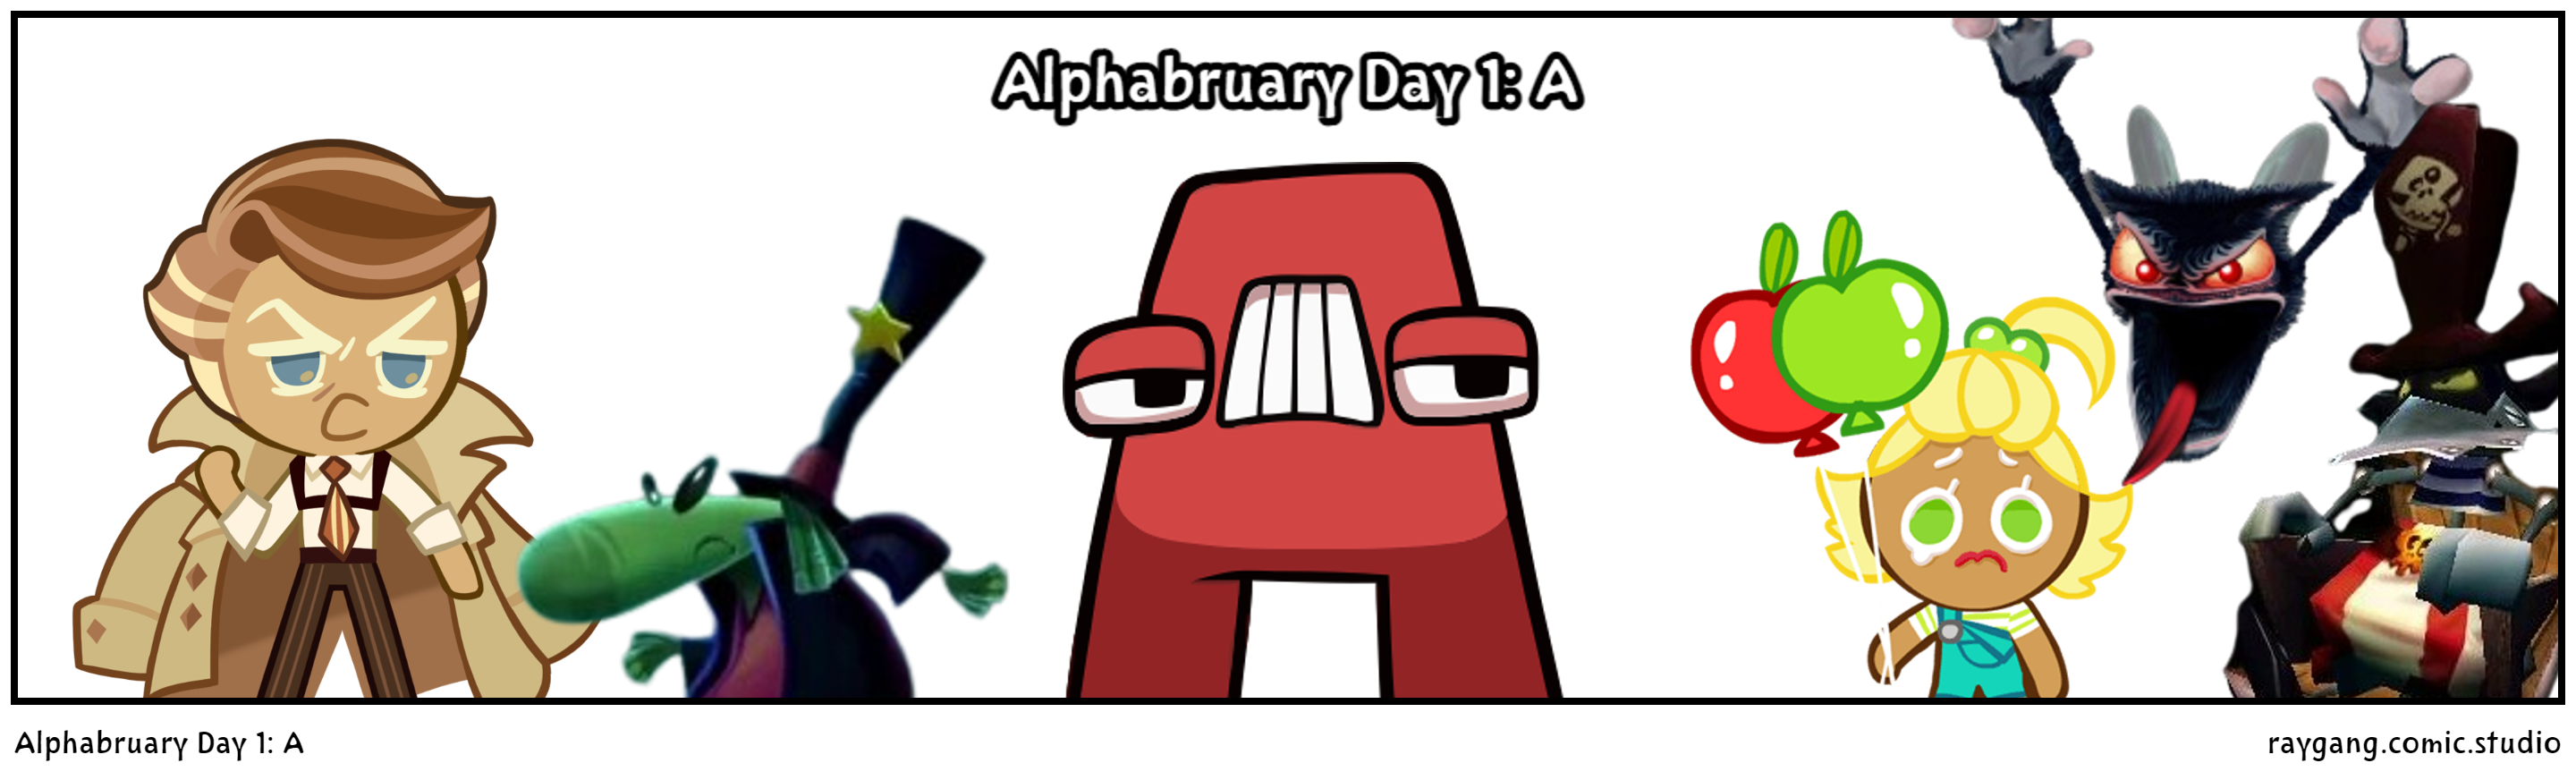 Alphabruary Day 1: A